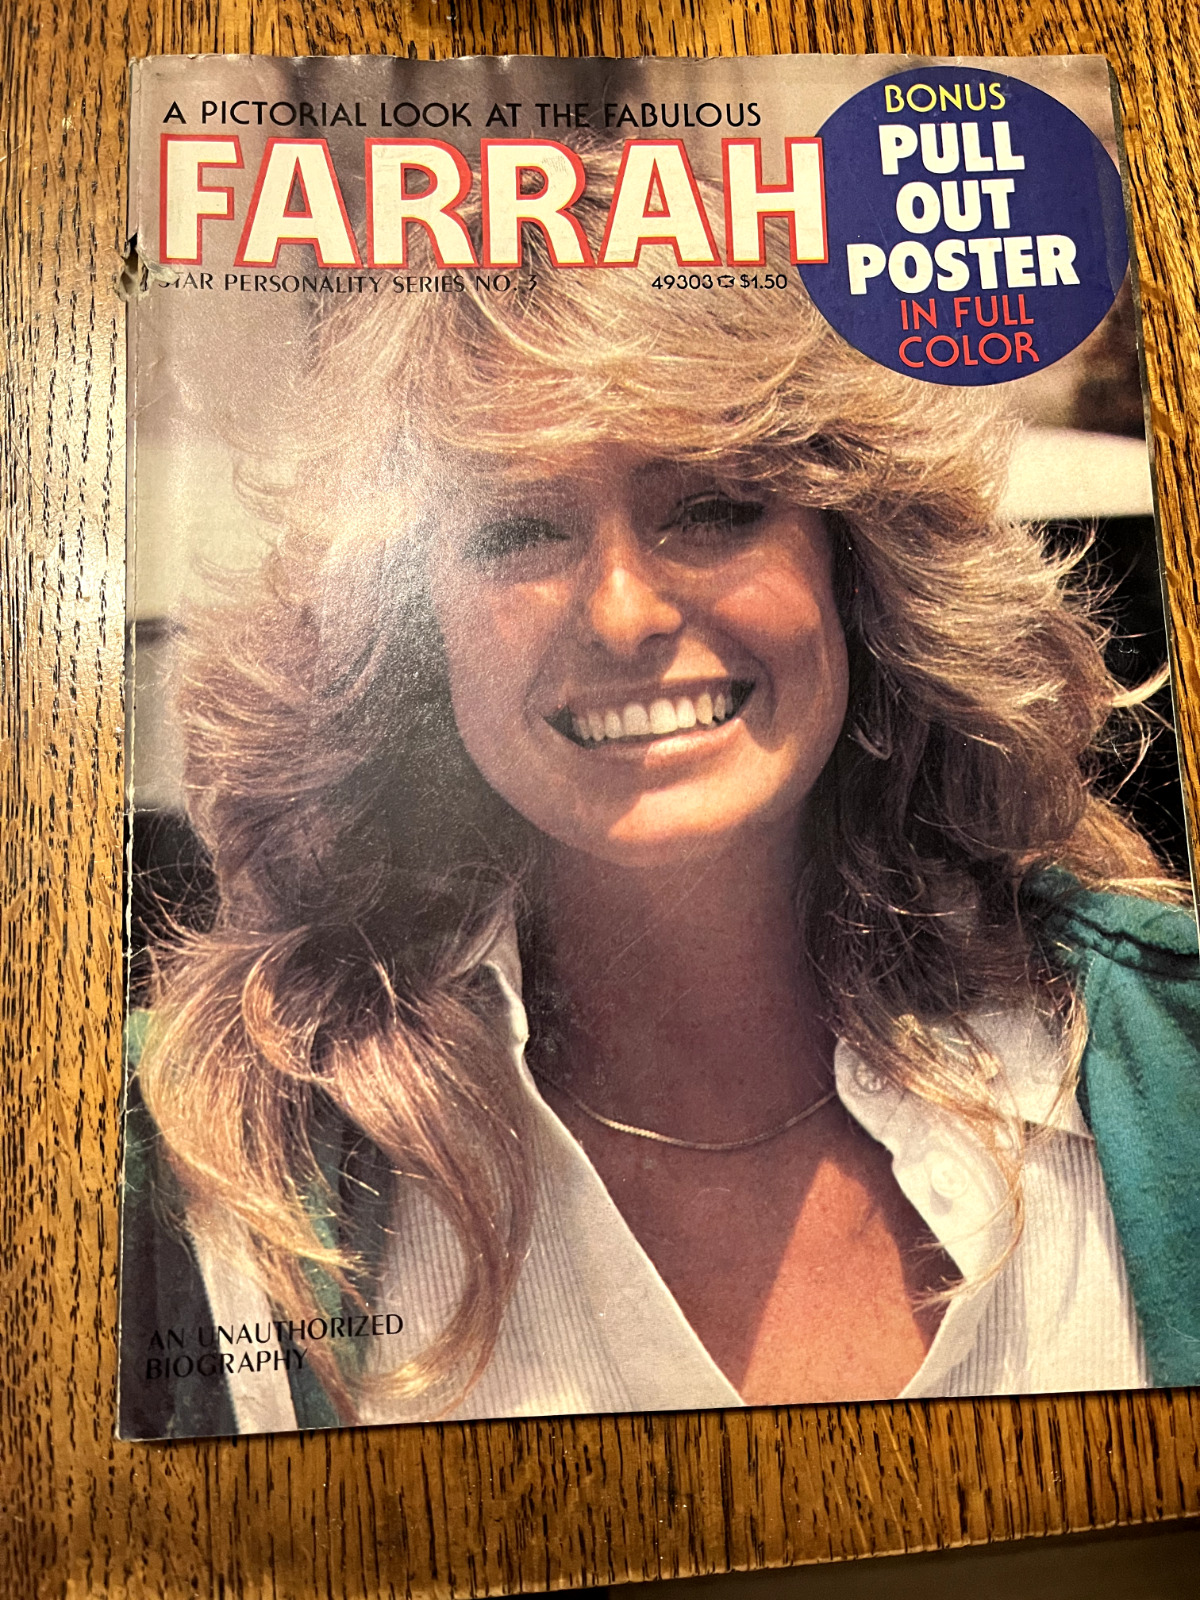 Farrah: A Pictorial Look At The Fabulous Farrah Bonus Pull Out Poster